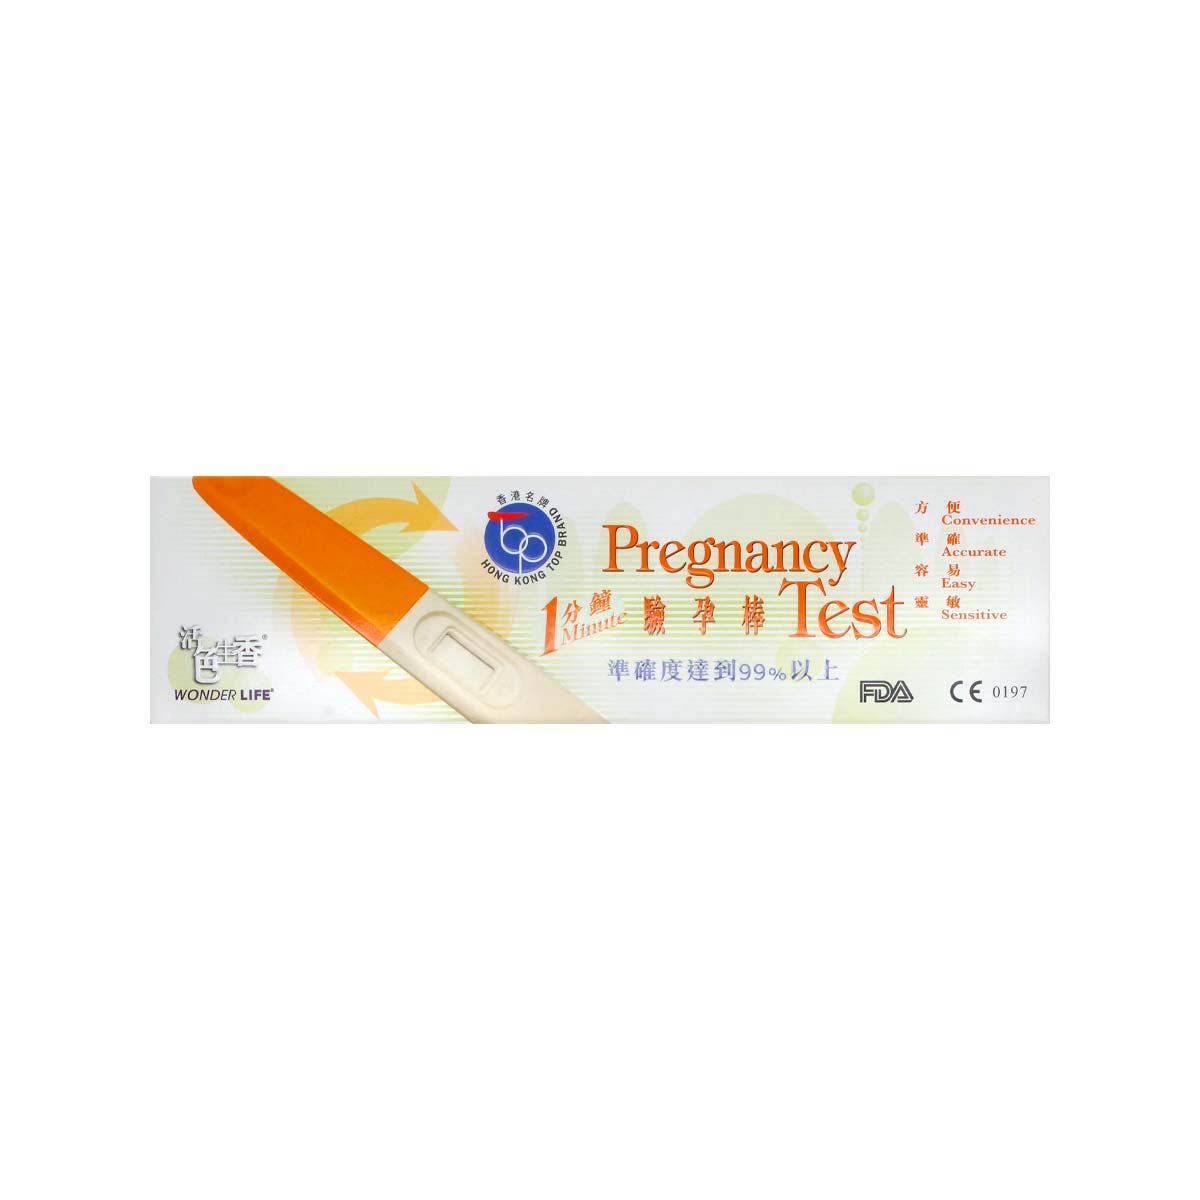 Wonder Life 1 minute pregnancy test-p_2